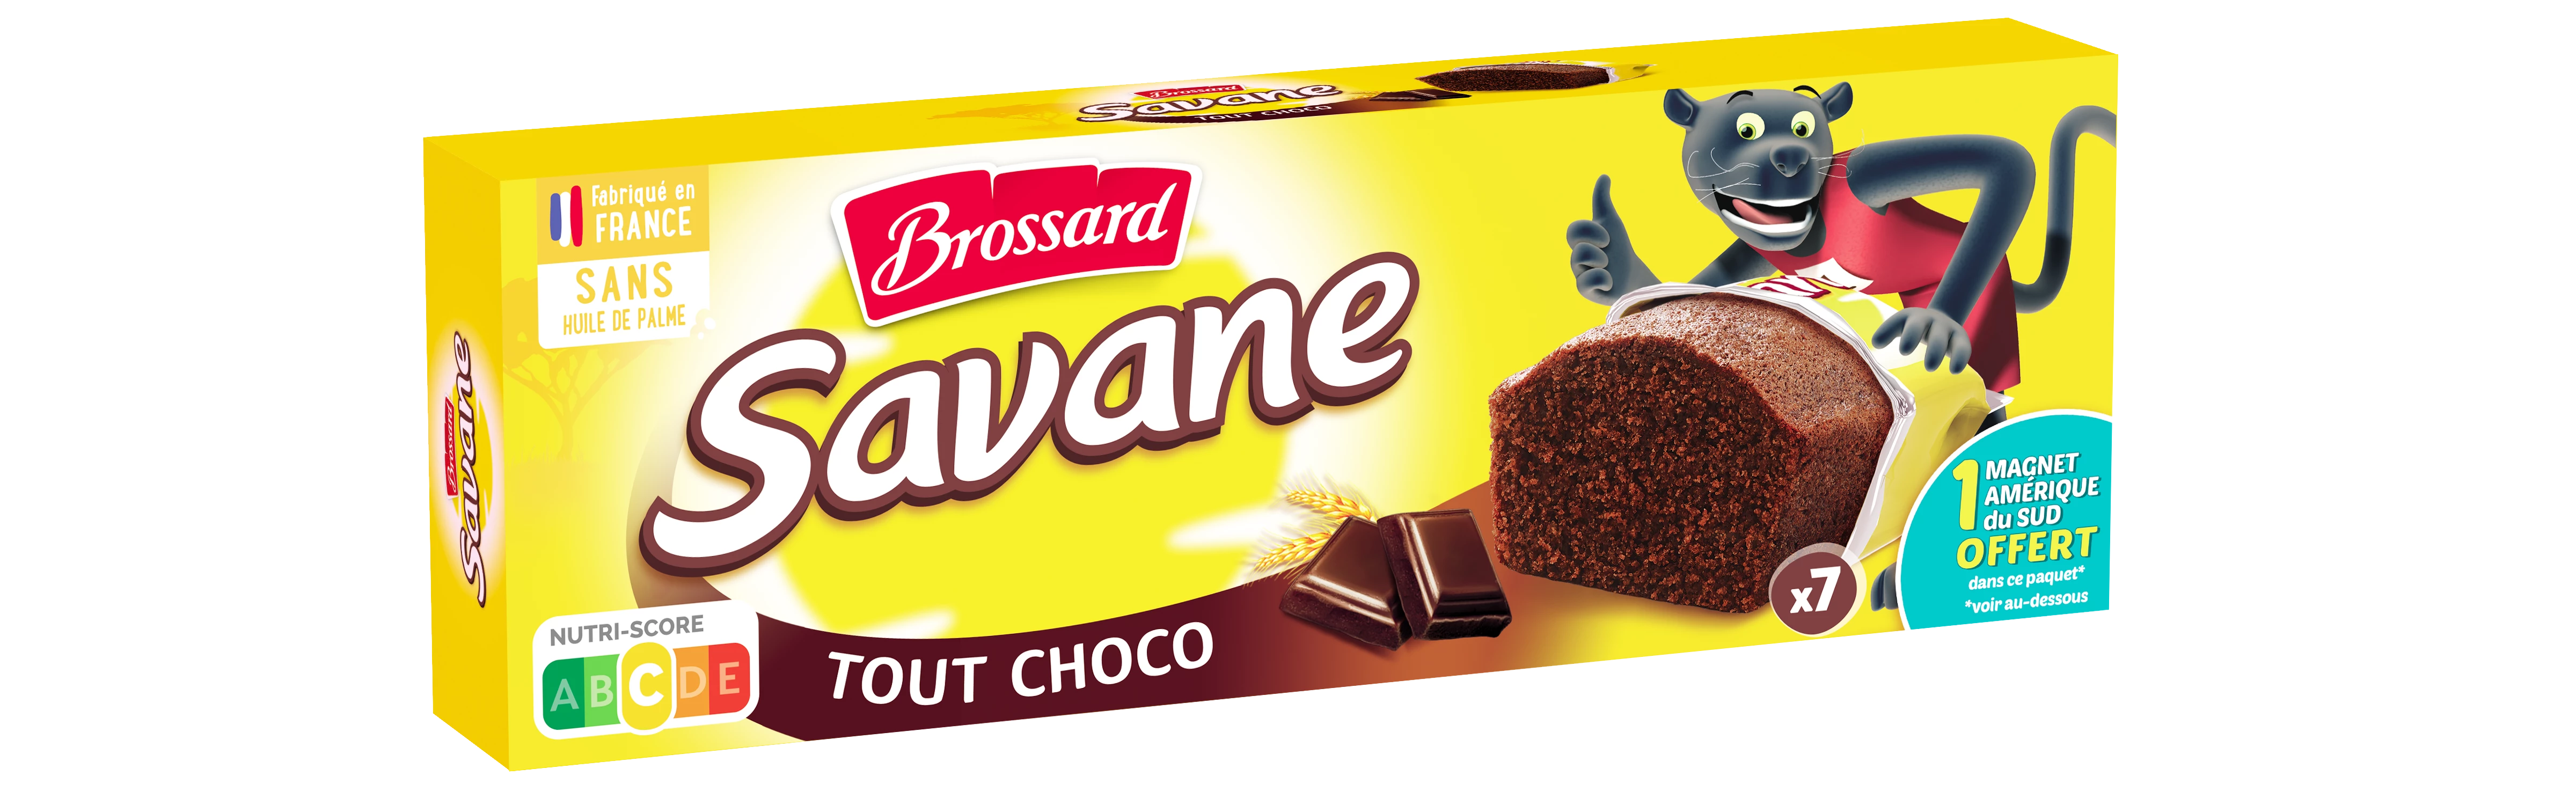 Savane Pocket All Choco X7 210г